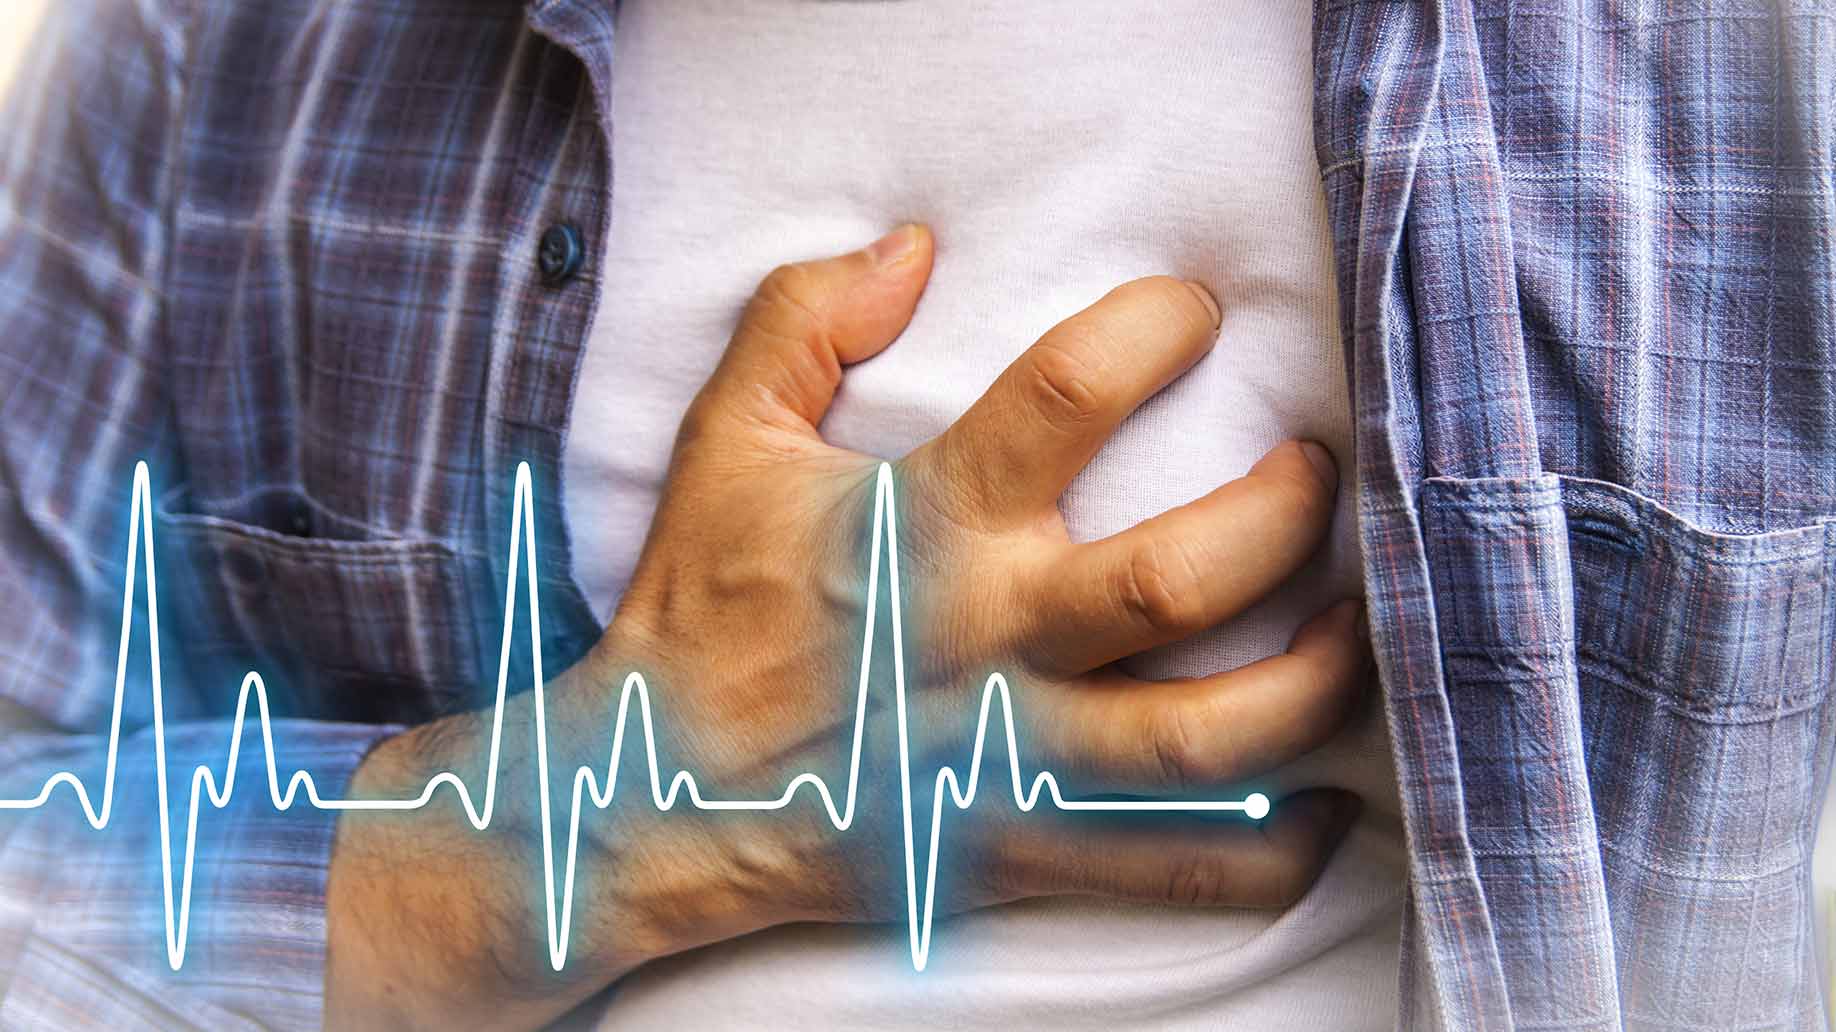 cardiovascular heart disease stroke anti inflammatory blood vessels clots chest pain green tea natural health benefits